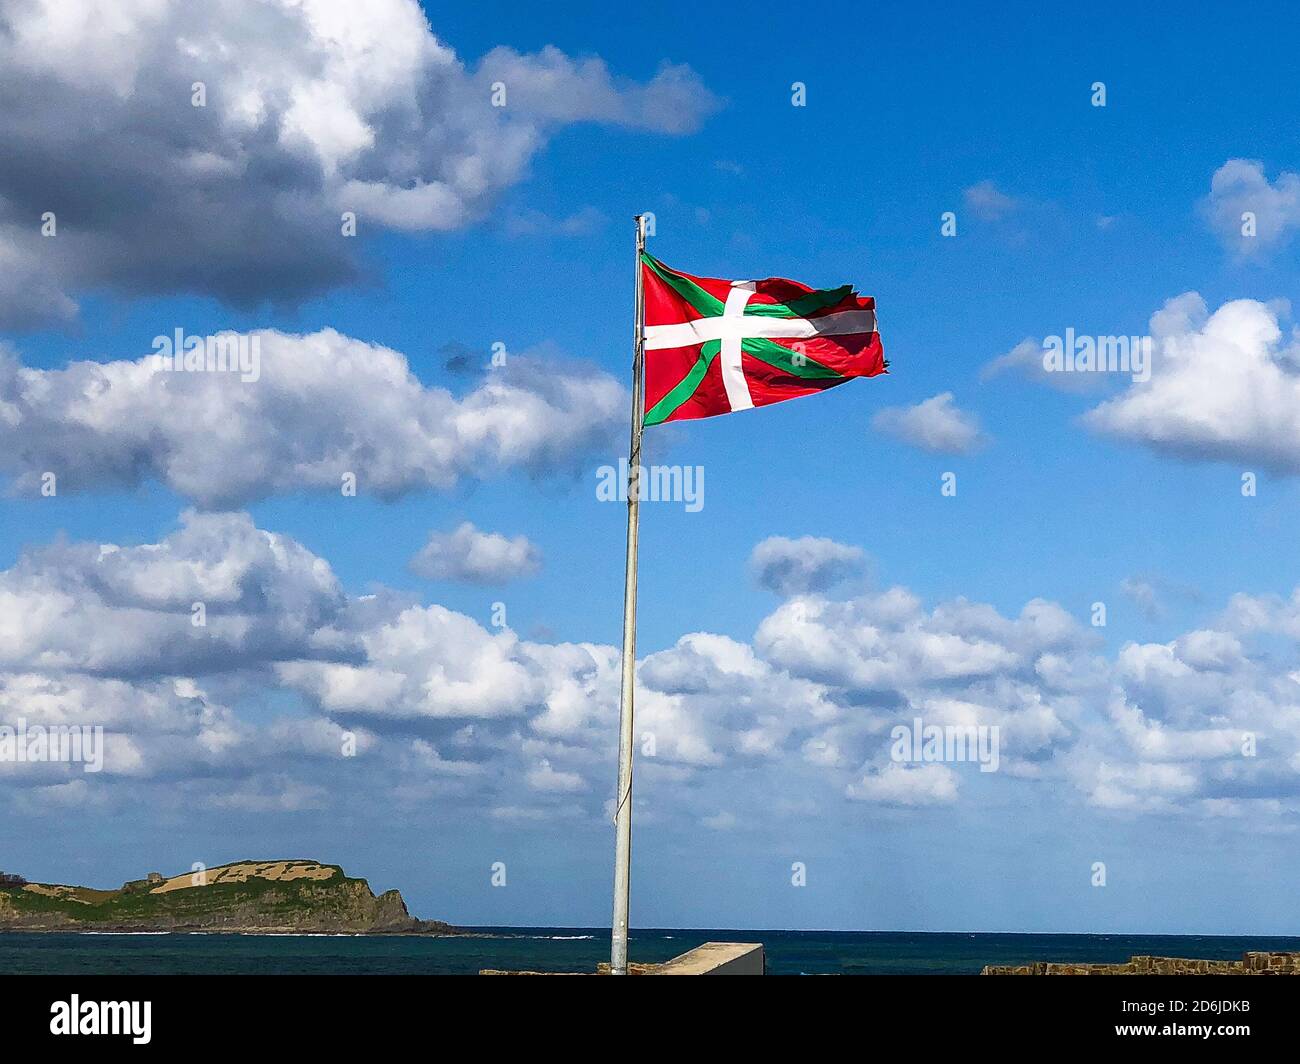 Ikurrina flag, symbol and flag of the Basque Autonomous Community. Mundaka, Spain Stock Photo